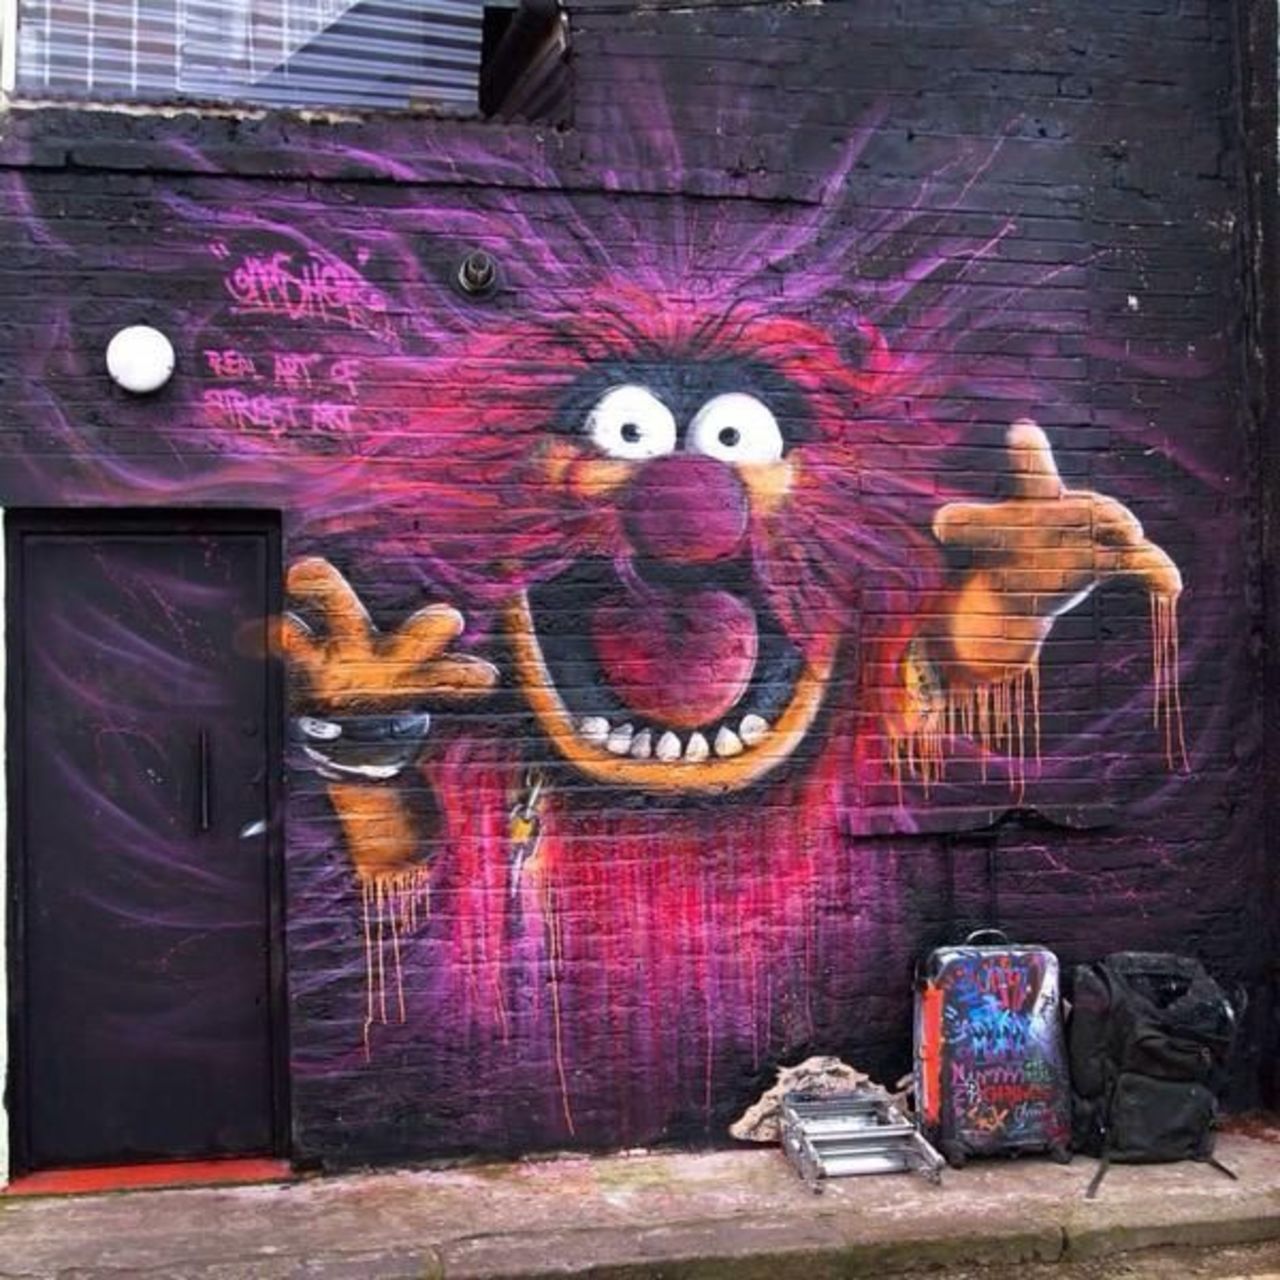 Animal by Gnasher#mural #graffiti #streetart #art https://t.co/aXbPRMsVig